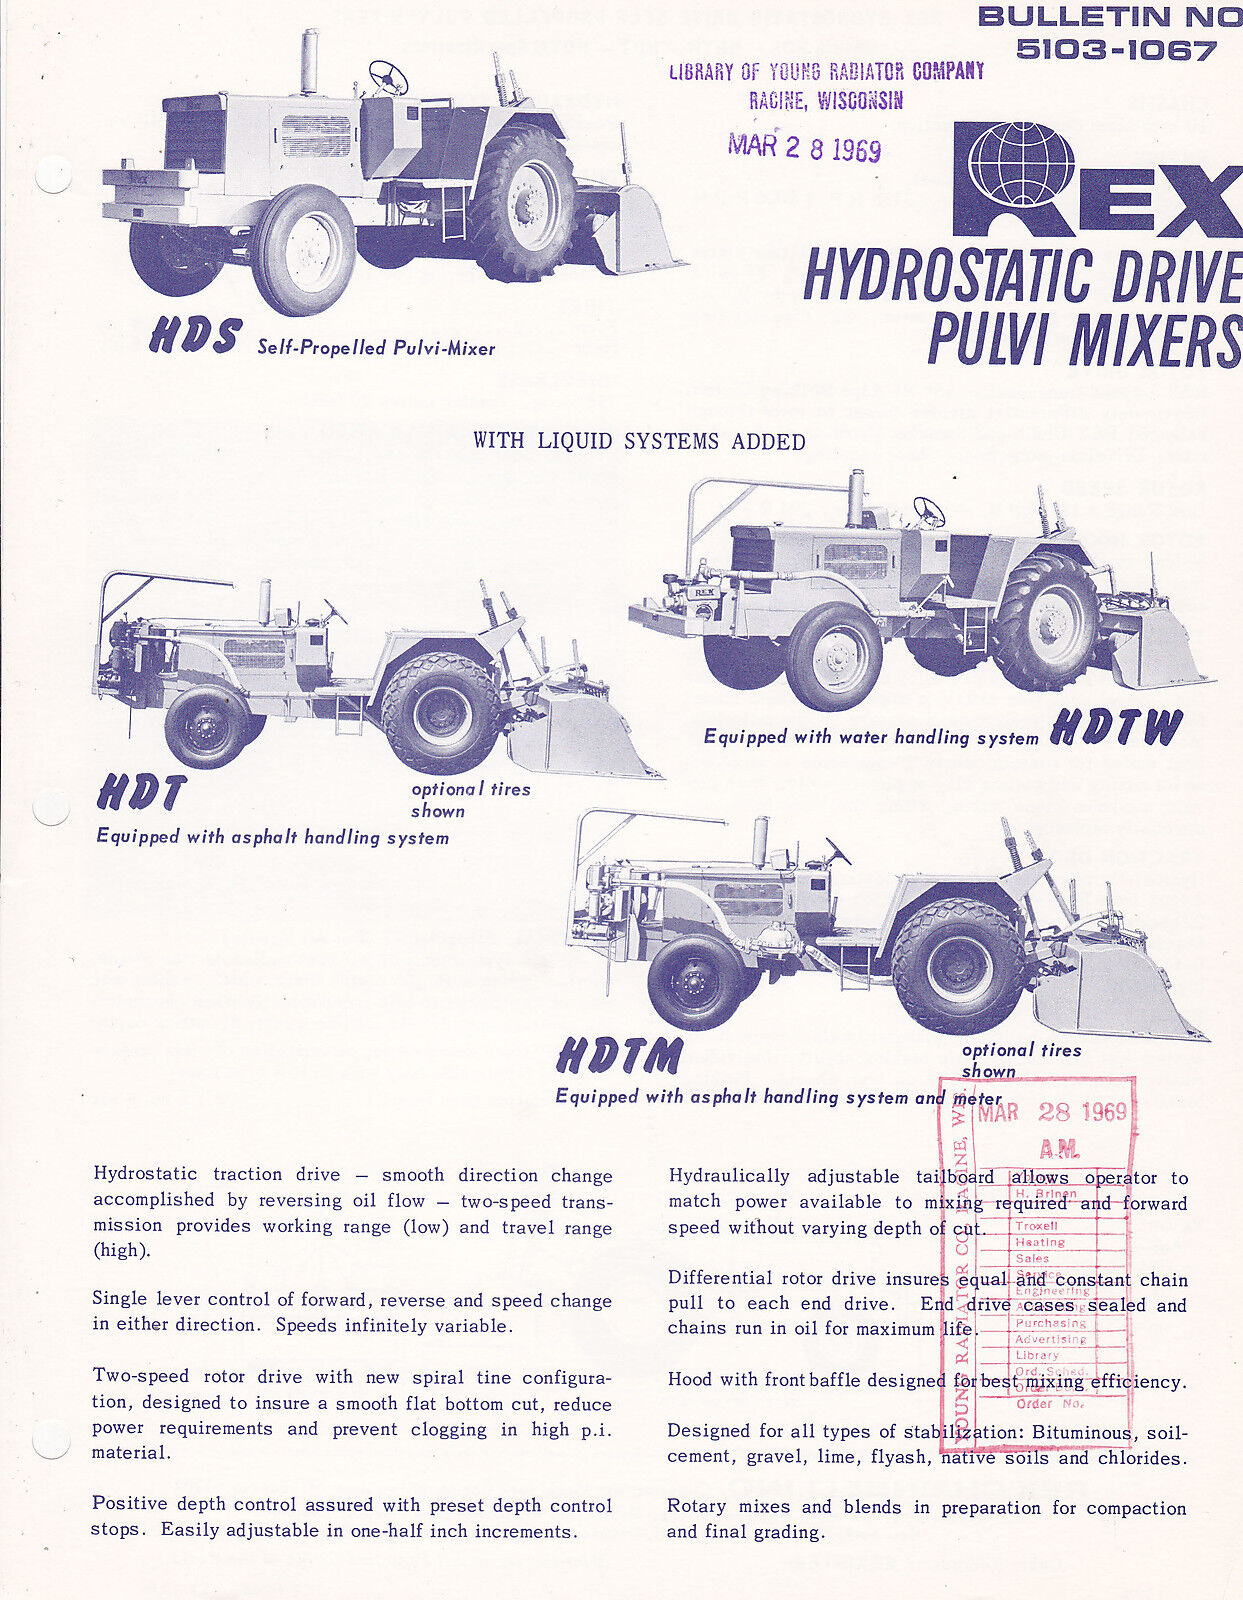 VINTAGE AD SHEET #3091 - 1969 REX HYDROSTATIC DRIVE PULVI MIXER CONSTRUCTION